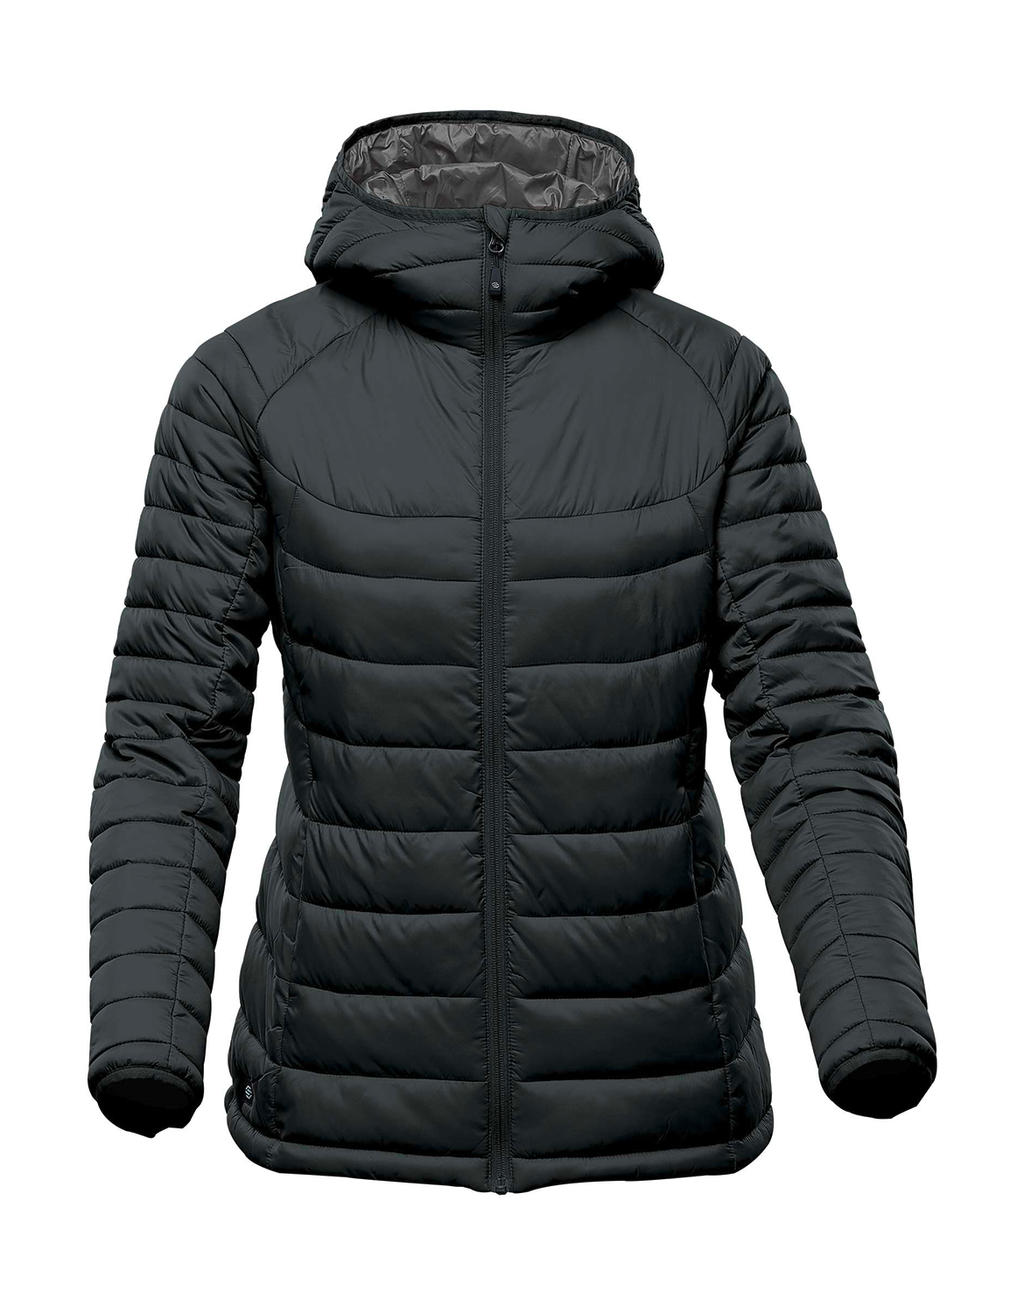  Womens Stavanger Thermal Jacket in Farbe Black/Graphite